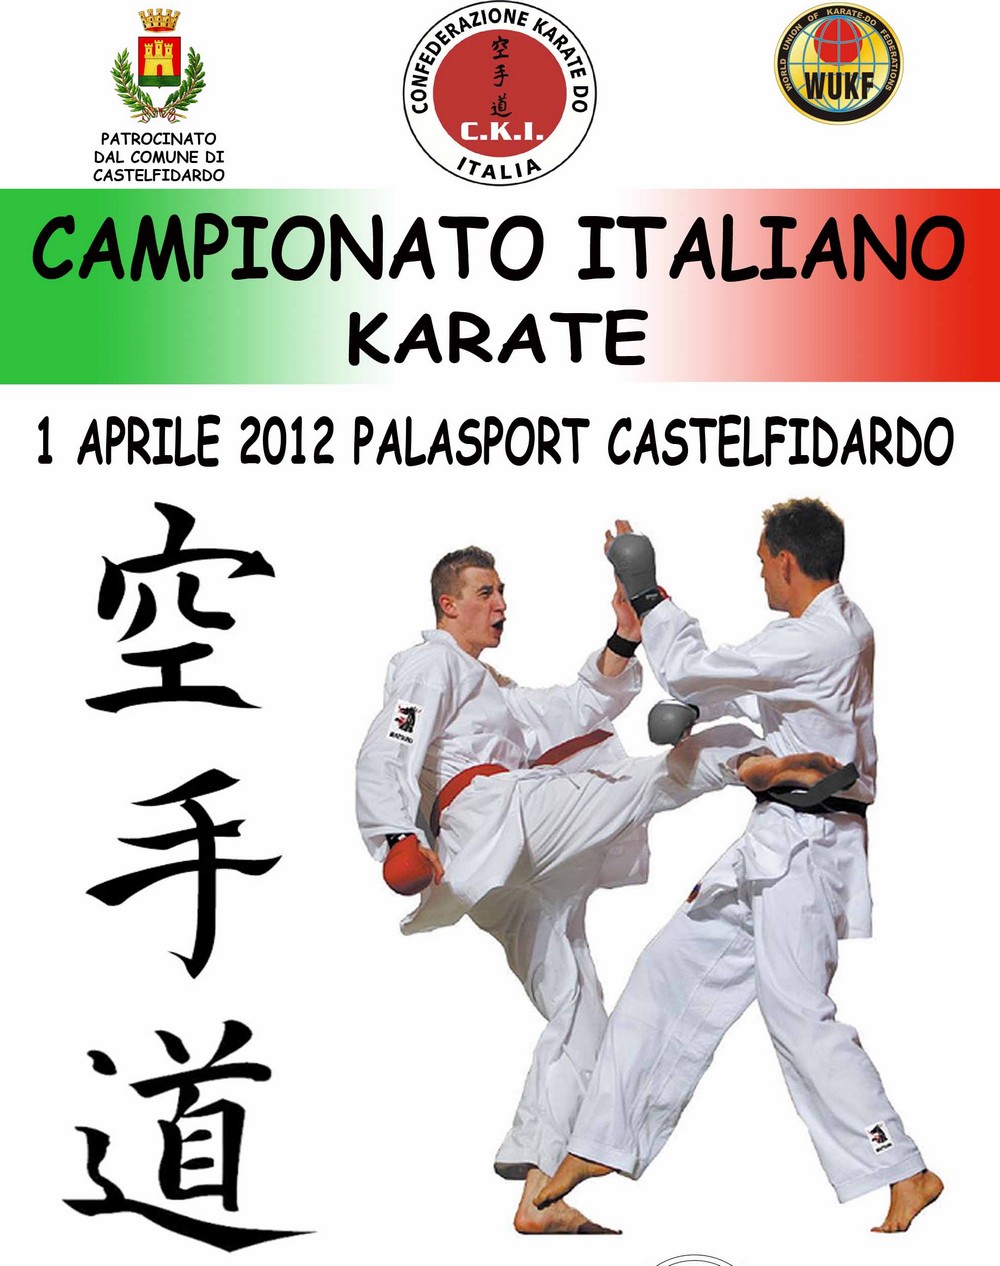 Campionati italiani di karate al Palaolimpia